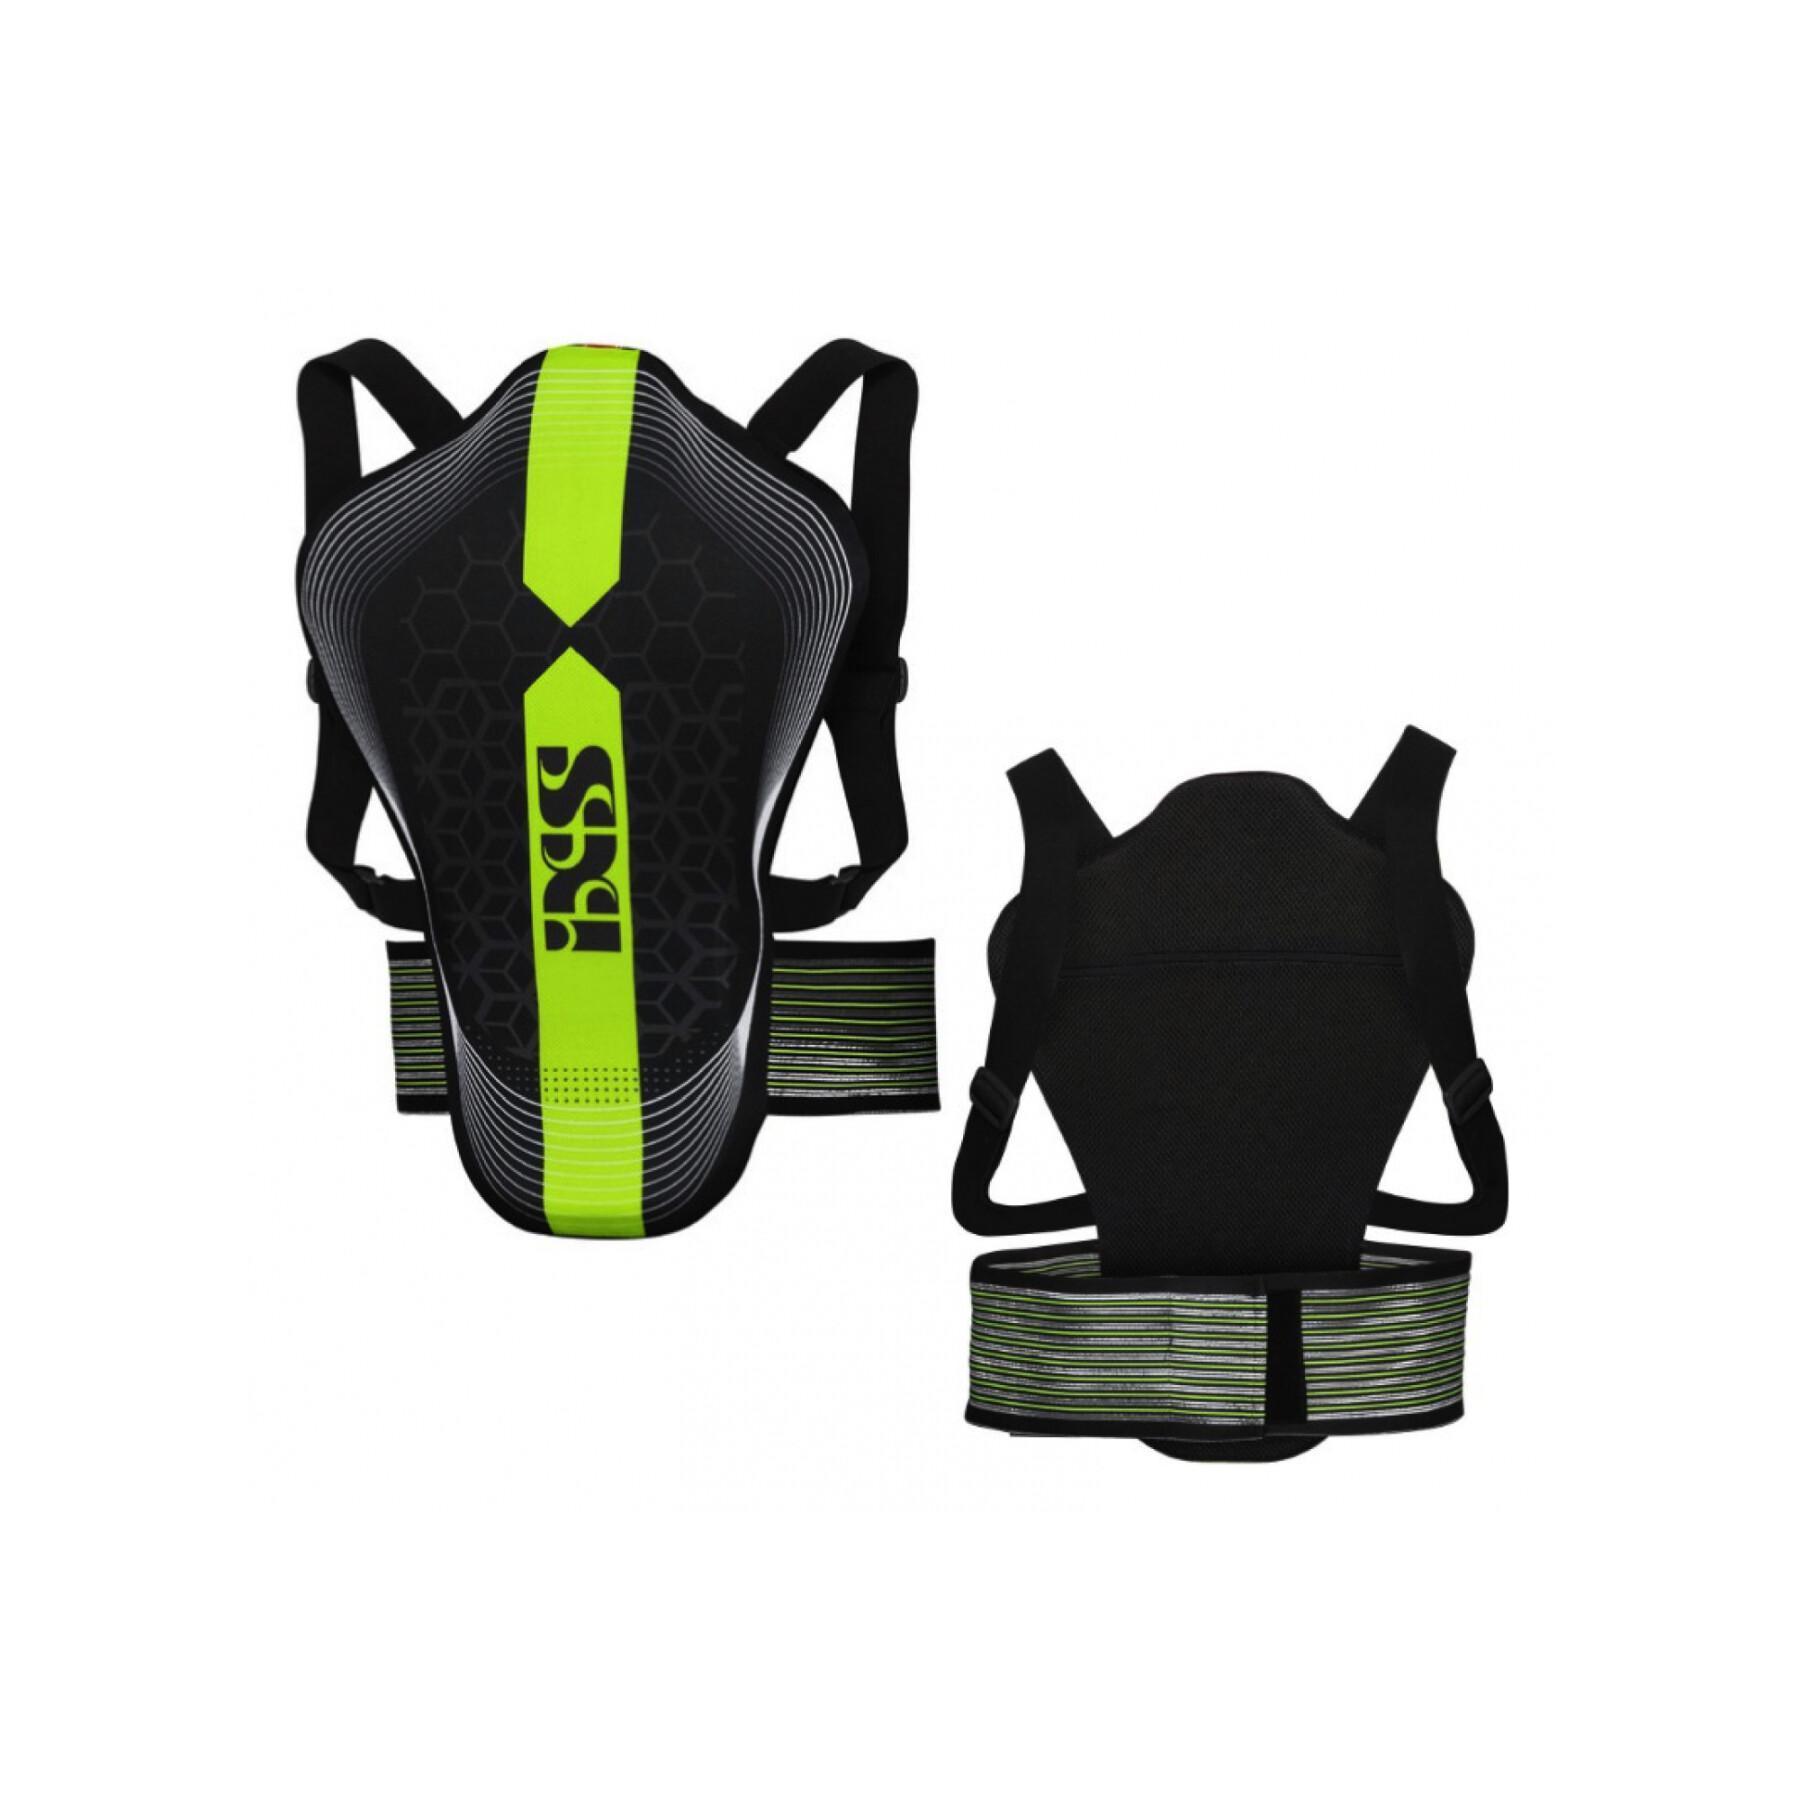 Protection dorsale moto IXS Rs-10 - Protections - Equipement du motard